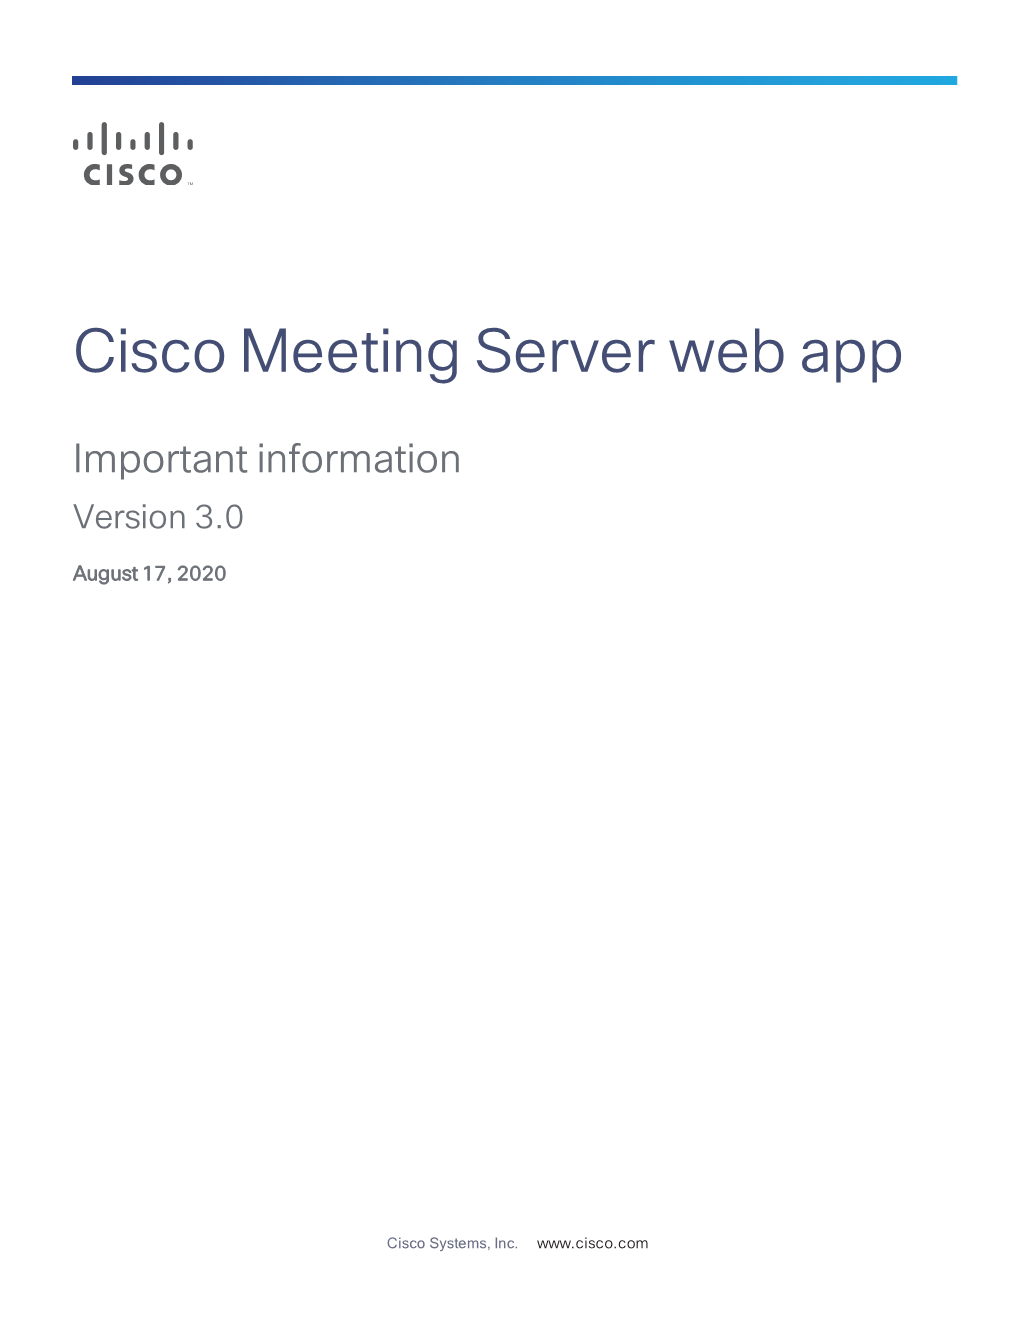 Cisco Meeting Server Web App 3.0 Important Information